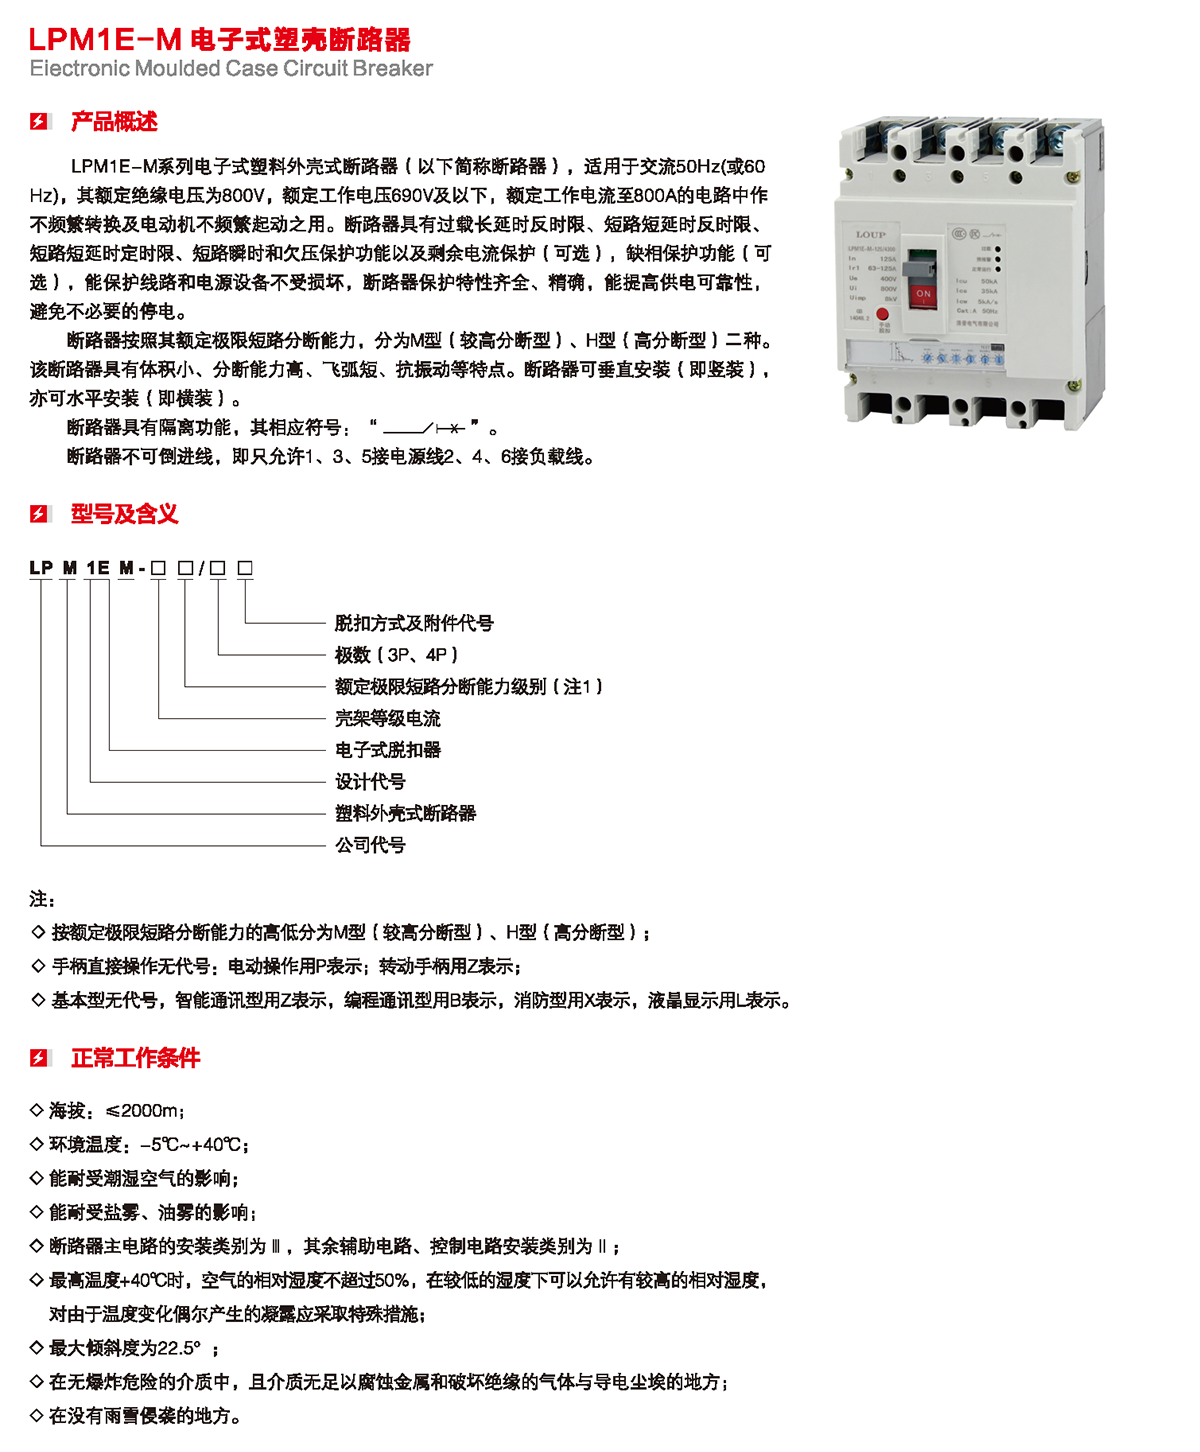 LPM1E-M电子式塑壳断路器产品概述、型号含义、正常工作条件